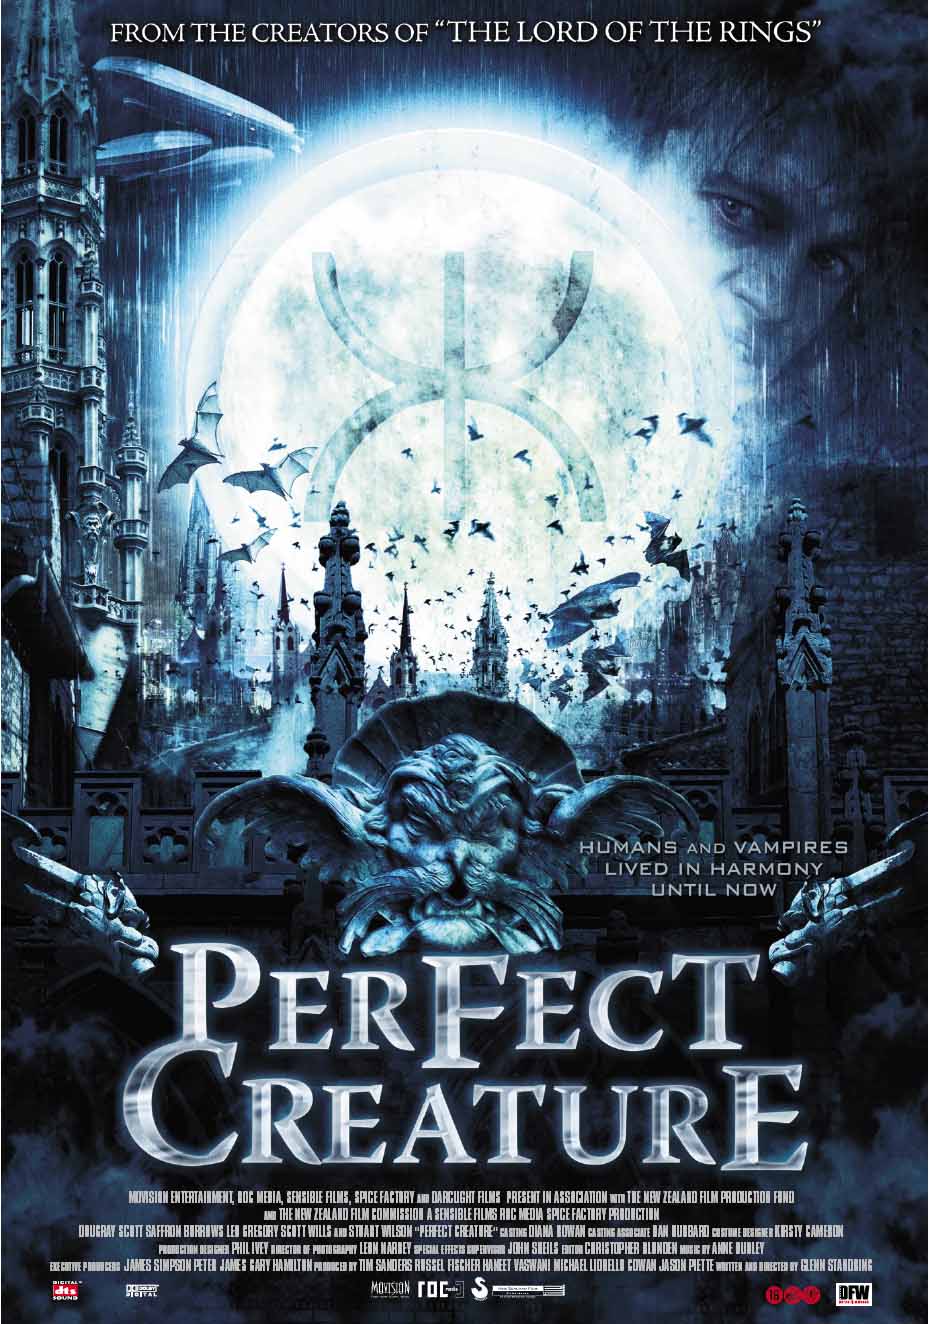 Perfect creature (2 DVD ltd tin special edition)